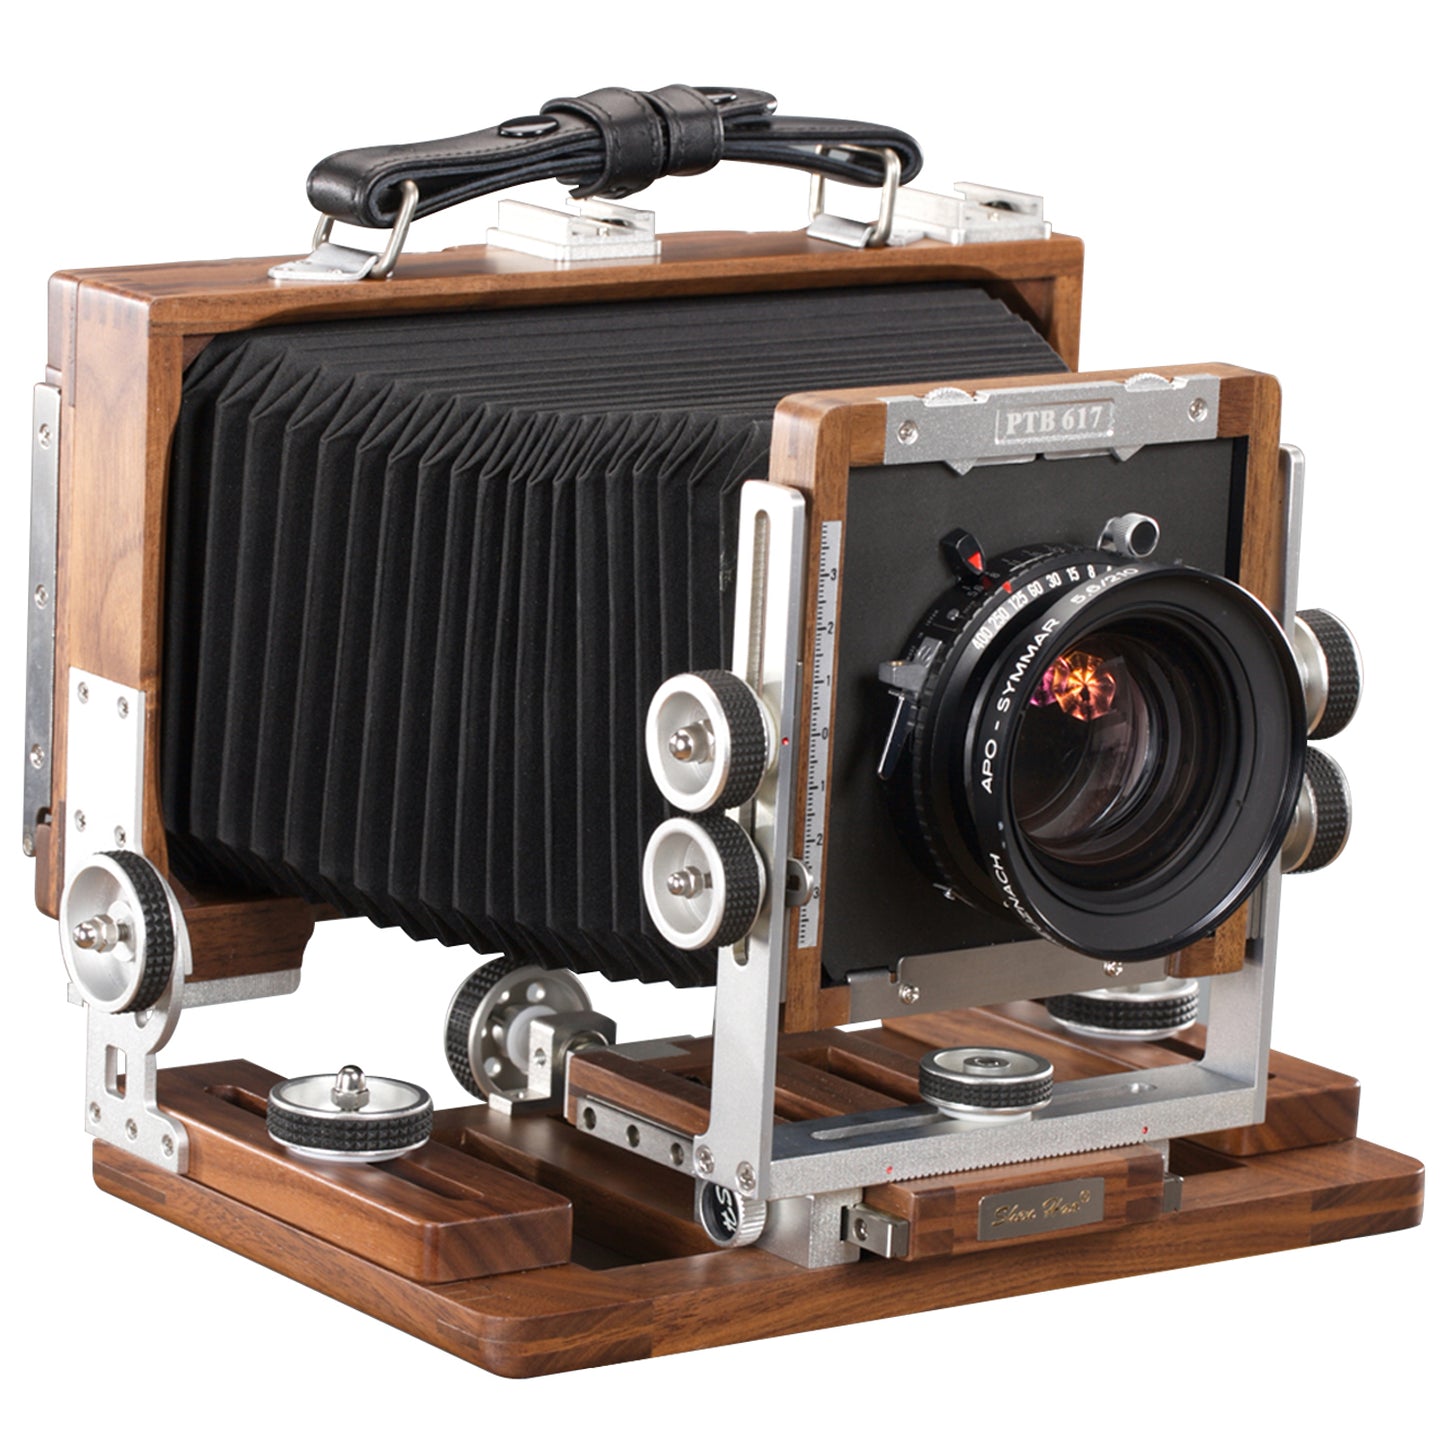 Shen Hao PTB617 Black Walnut Wood Film Camera 6x17cm Large Format Panorama with Film Back